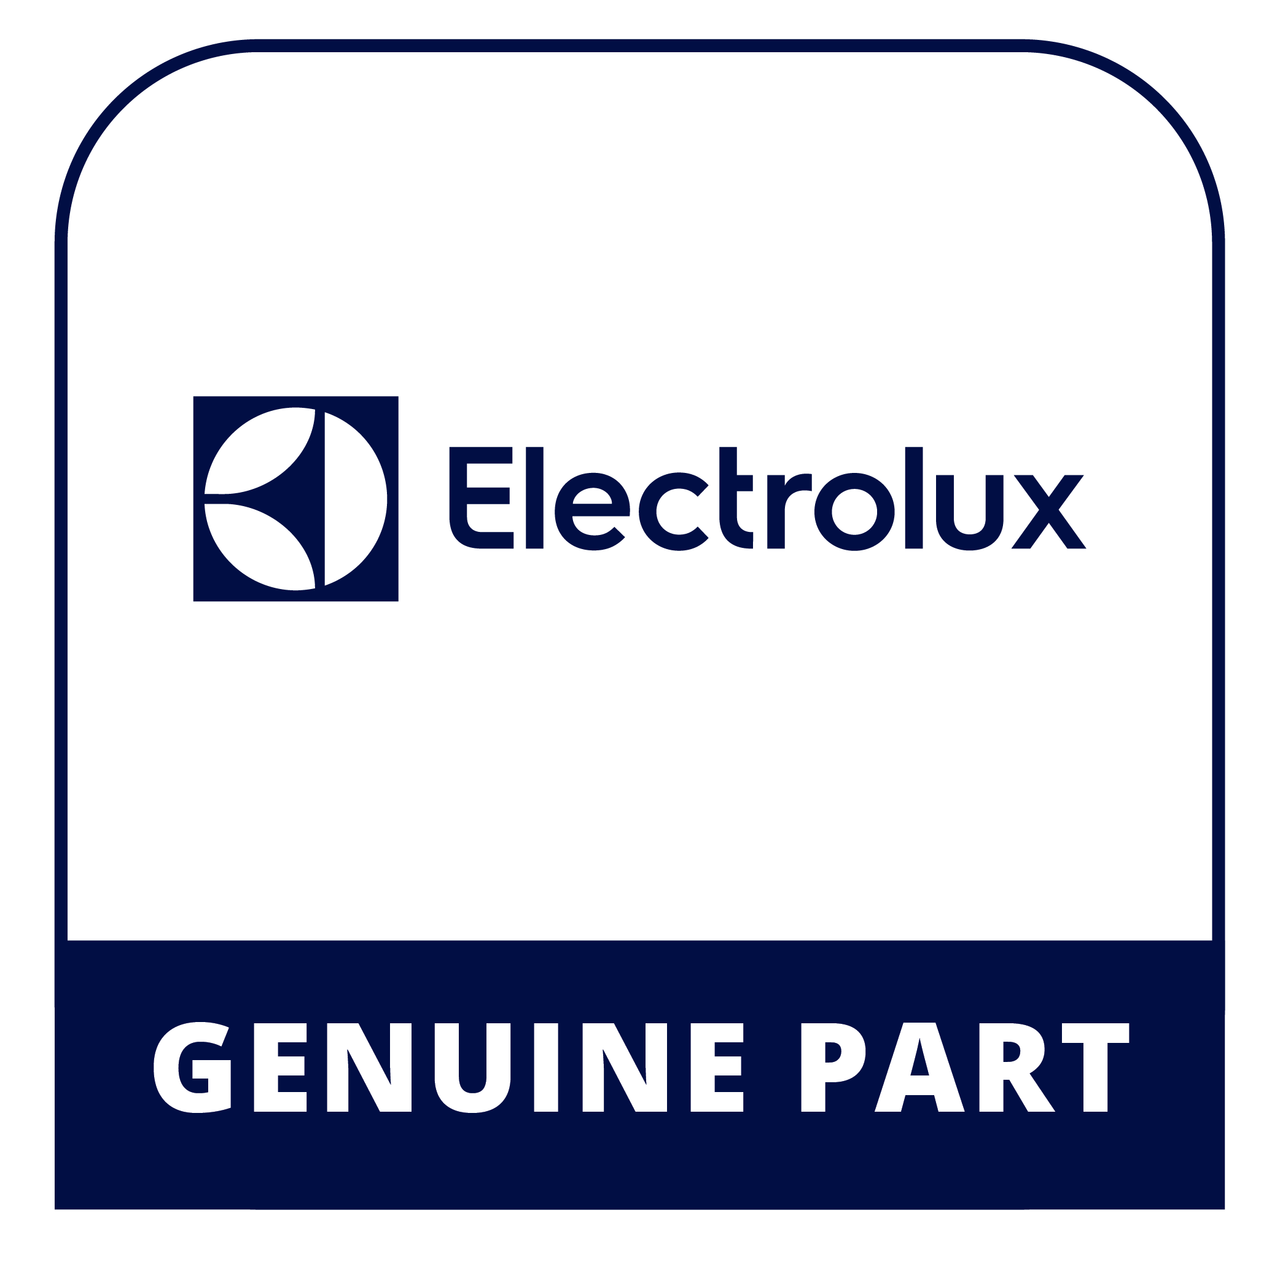 Frigidaire - Electrolux 154614002 - Motor & Pump Assy - Genuine Electrolux Part